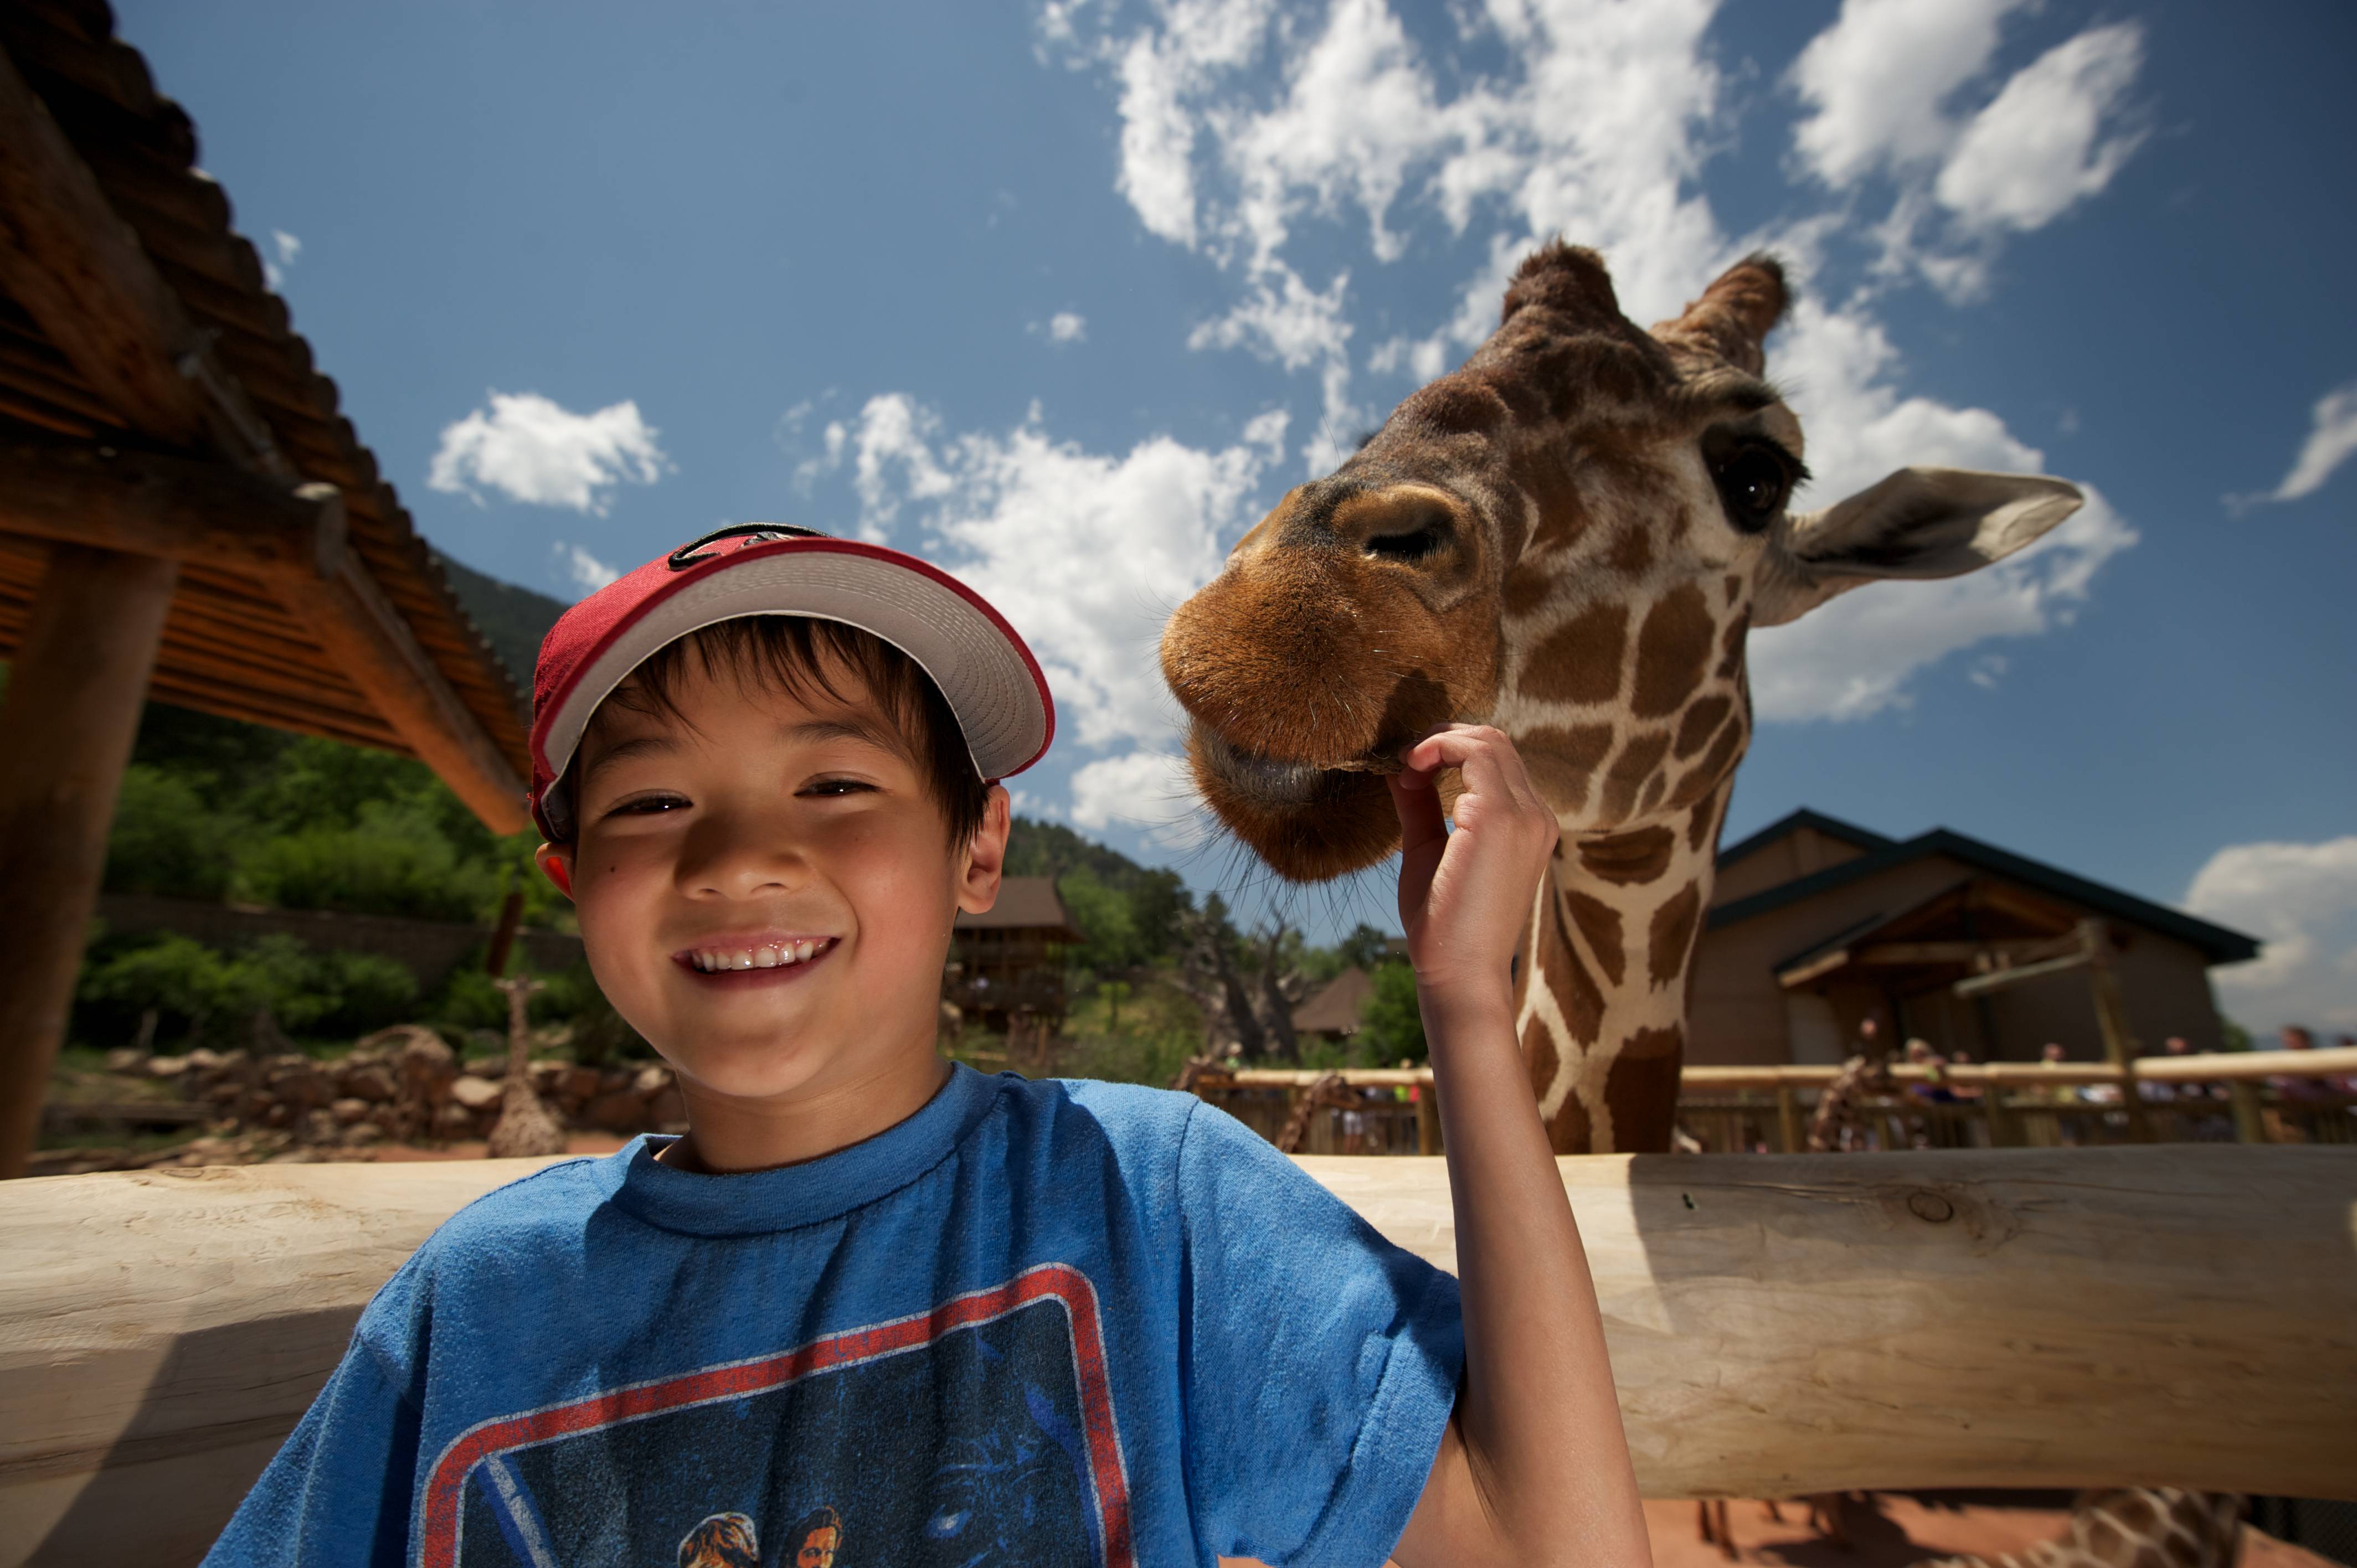 Child feeding giraffe at Cheyenne Mountain Zoo